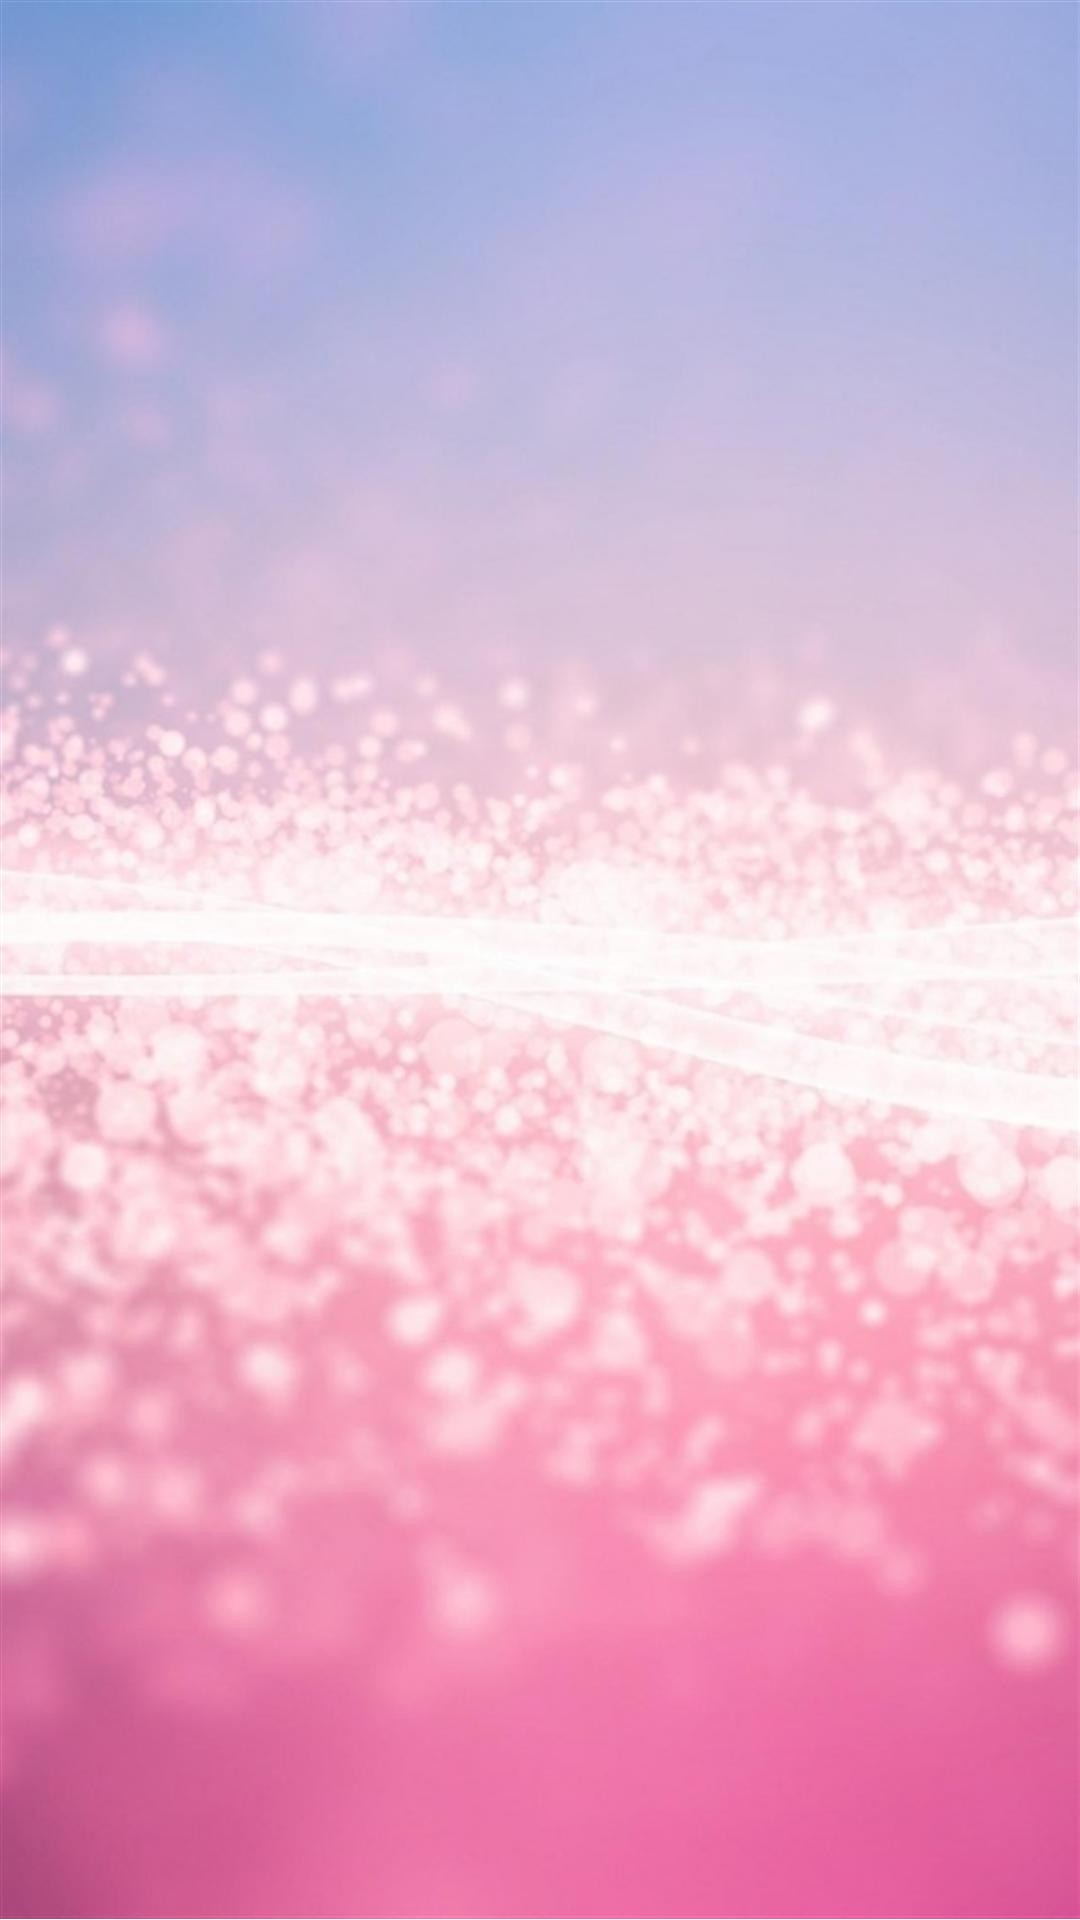 Pink Glitter Stardust iPhone 6 Wallpaper Download iPhone Wallpapers